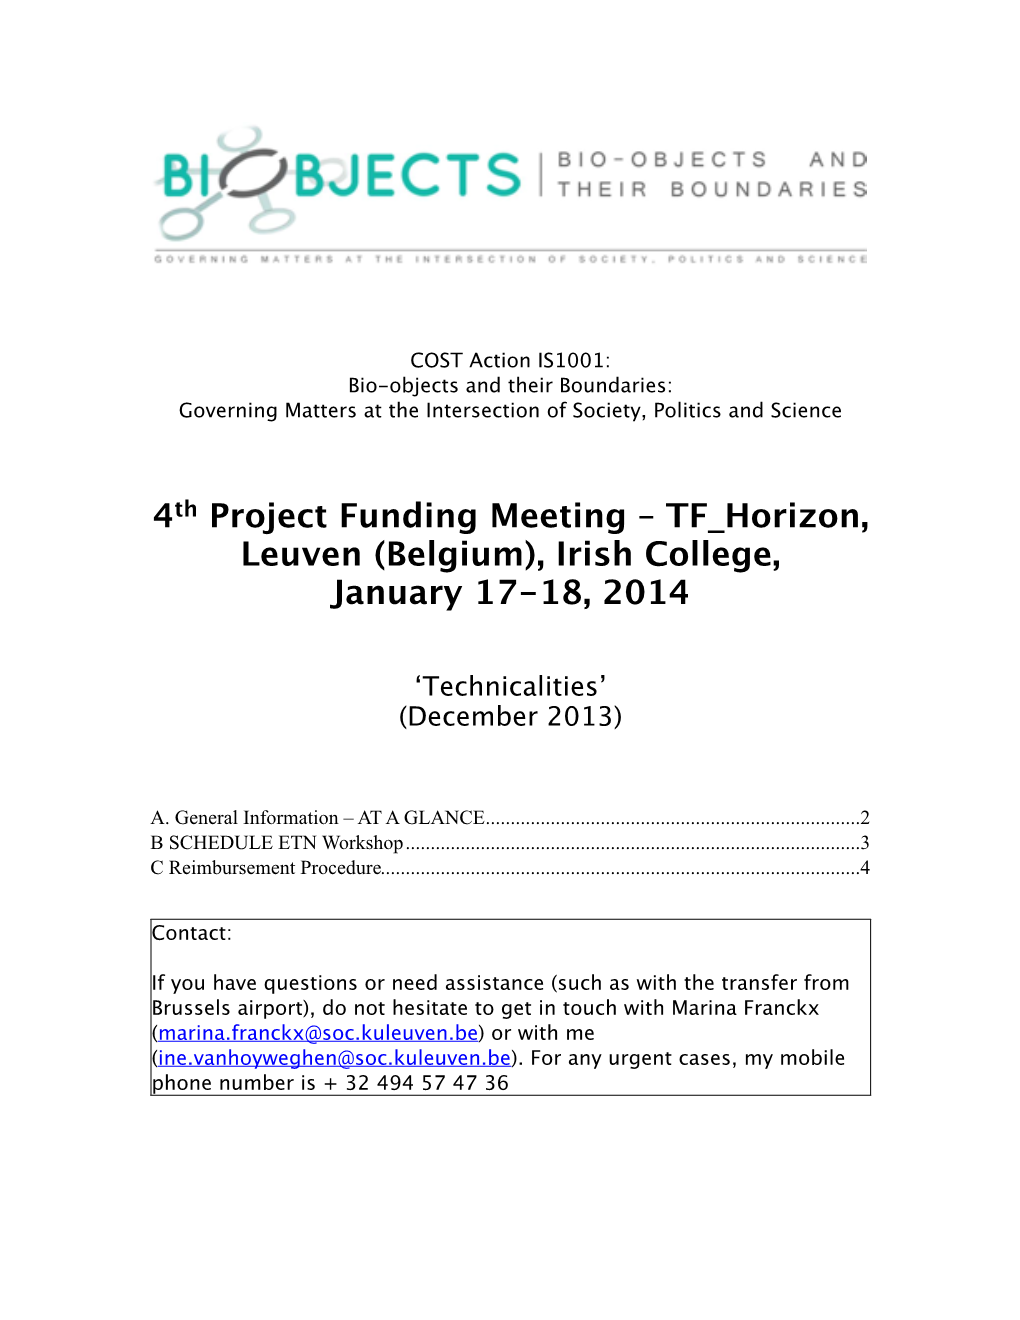 4Th Project Funding Meeting – TF Horizon, Leuven (Belgium), Irish College, January 17-18, 2014